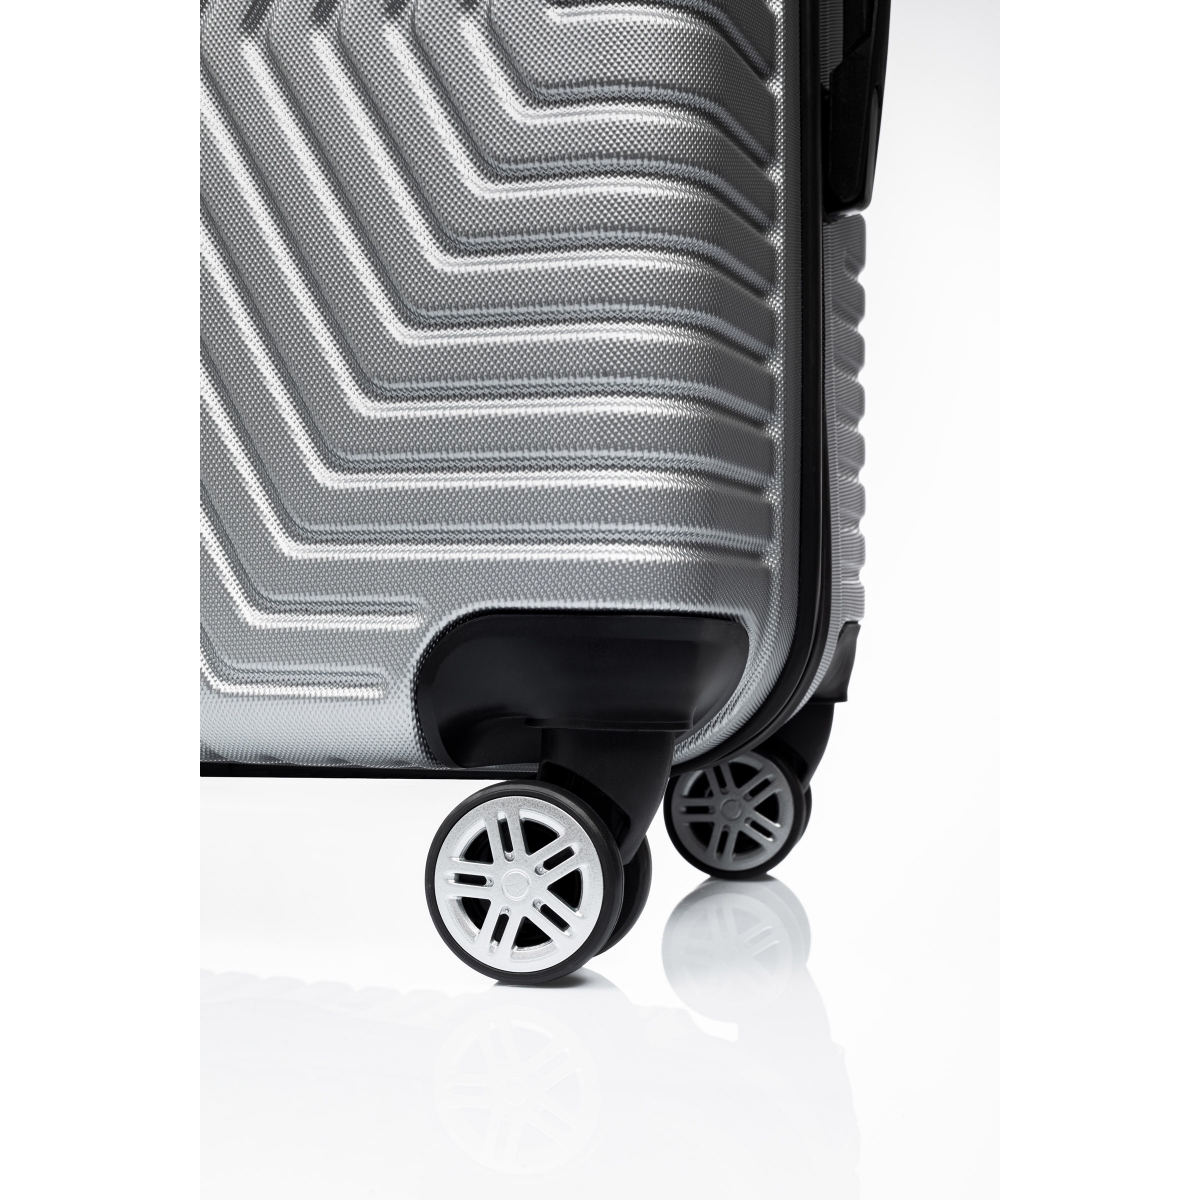 G&D Polo Suitcase ABS 3'lü Lüx Valiz Seyahat Seti - Model:600.03 Gri